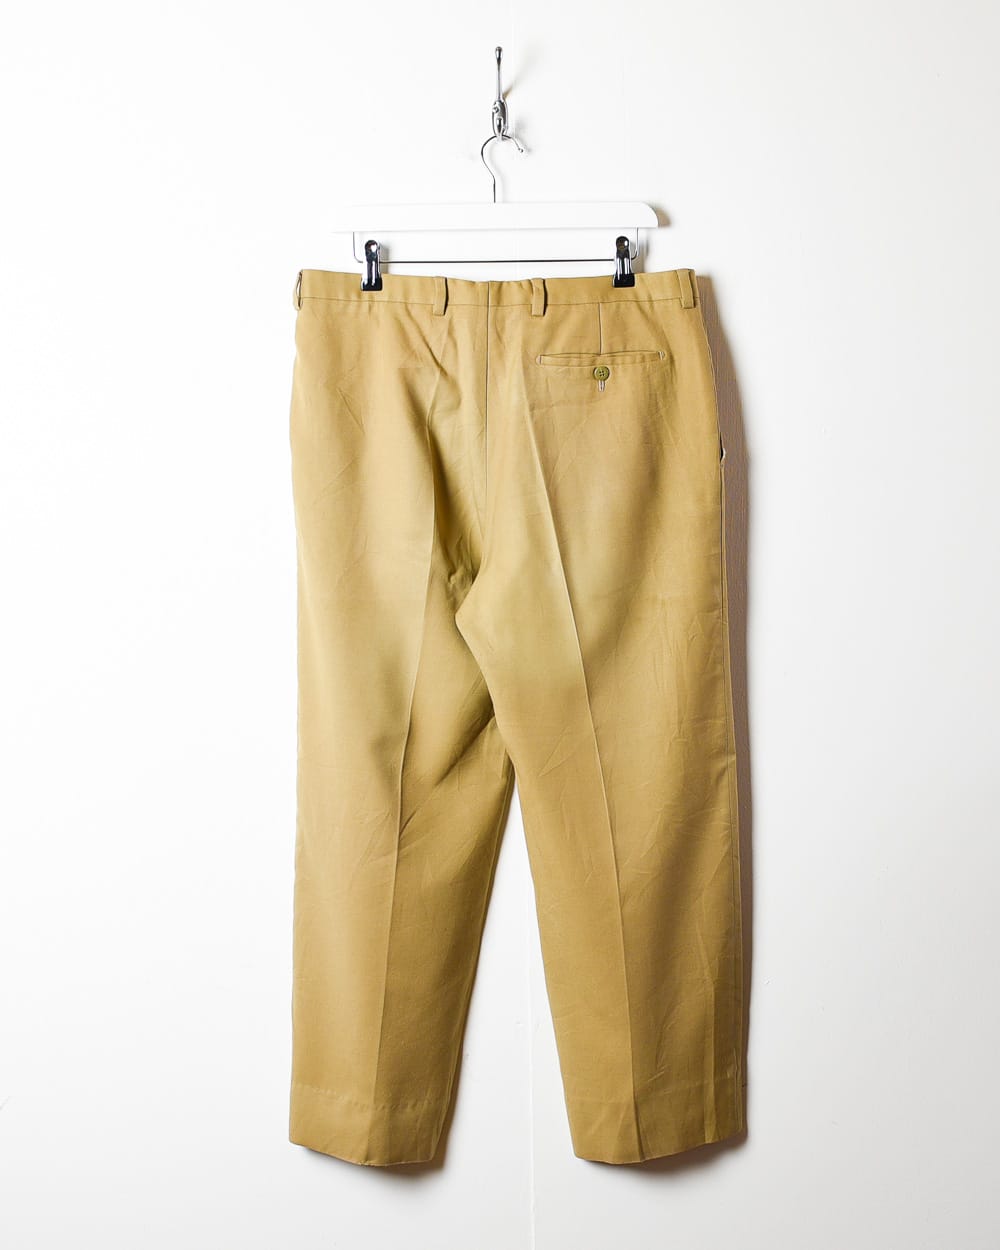 Neutral Burberry Trousers - W34 L27